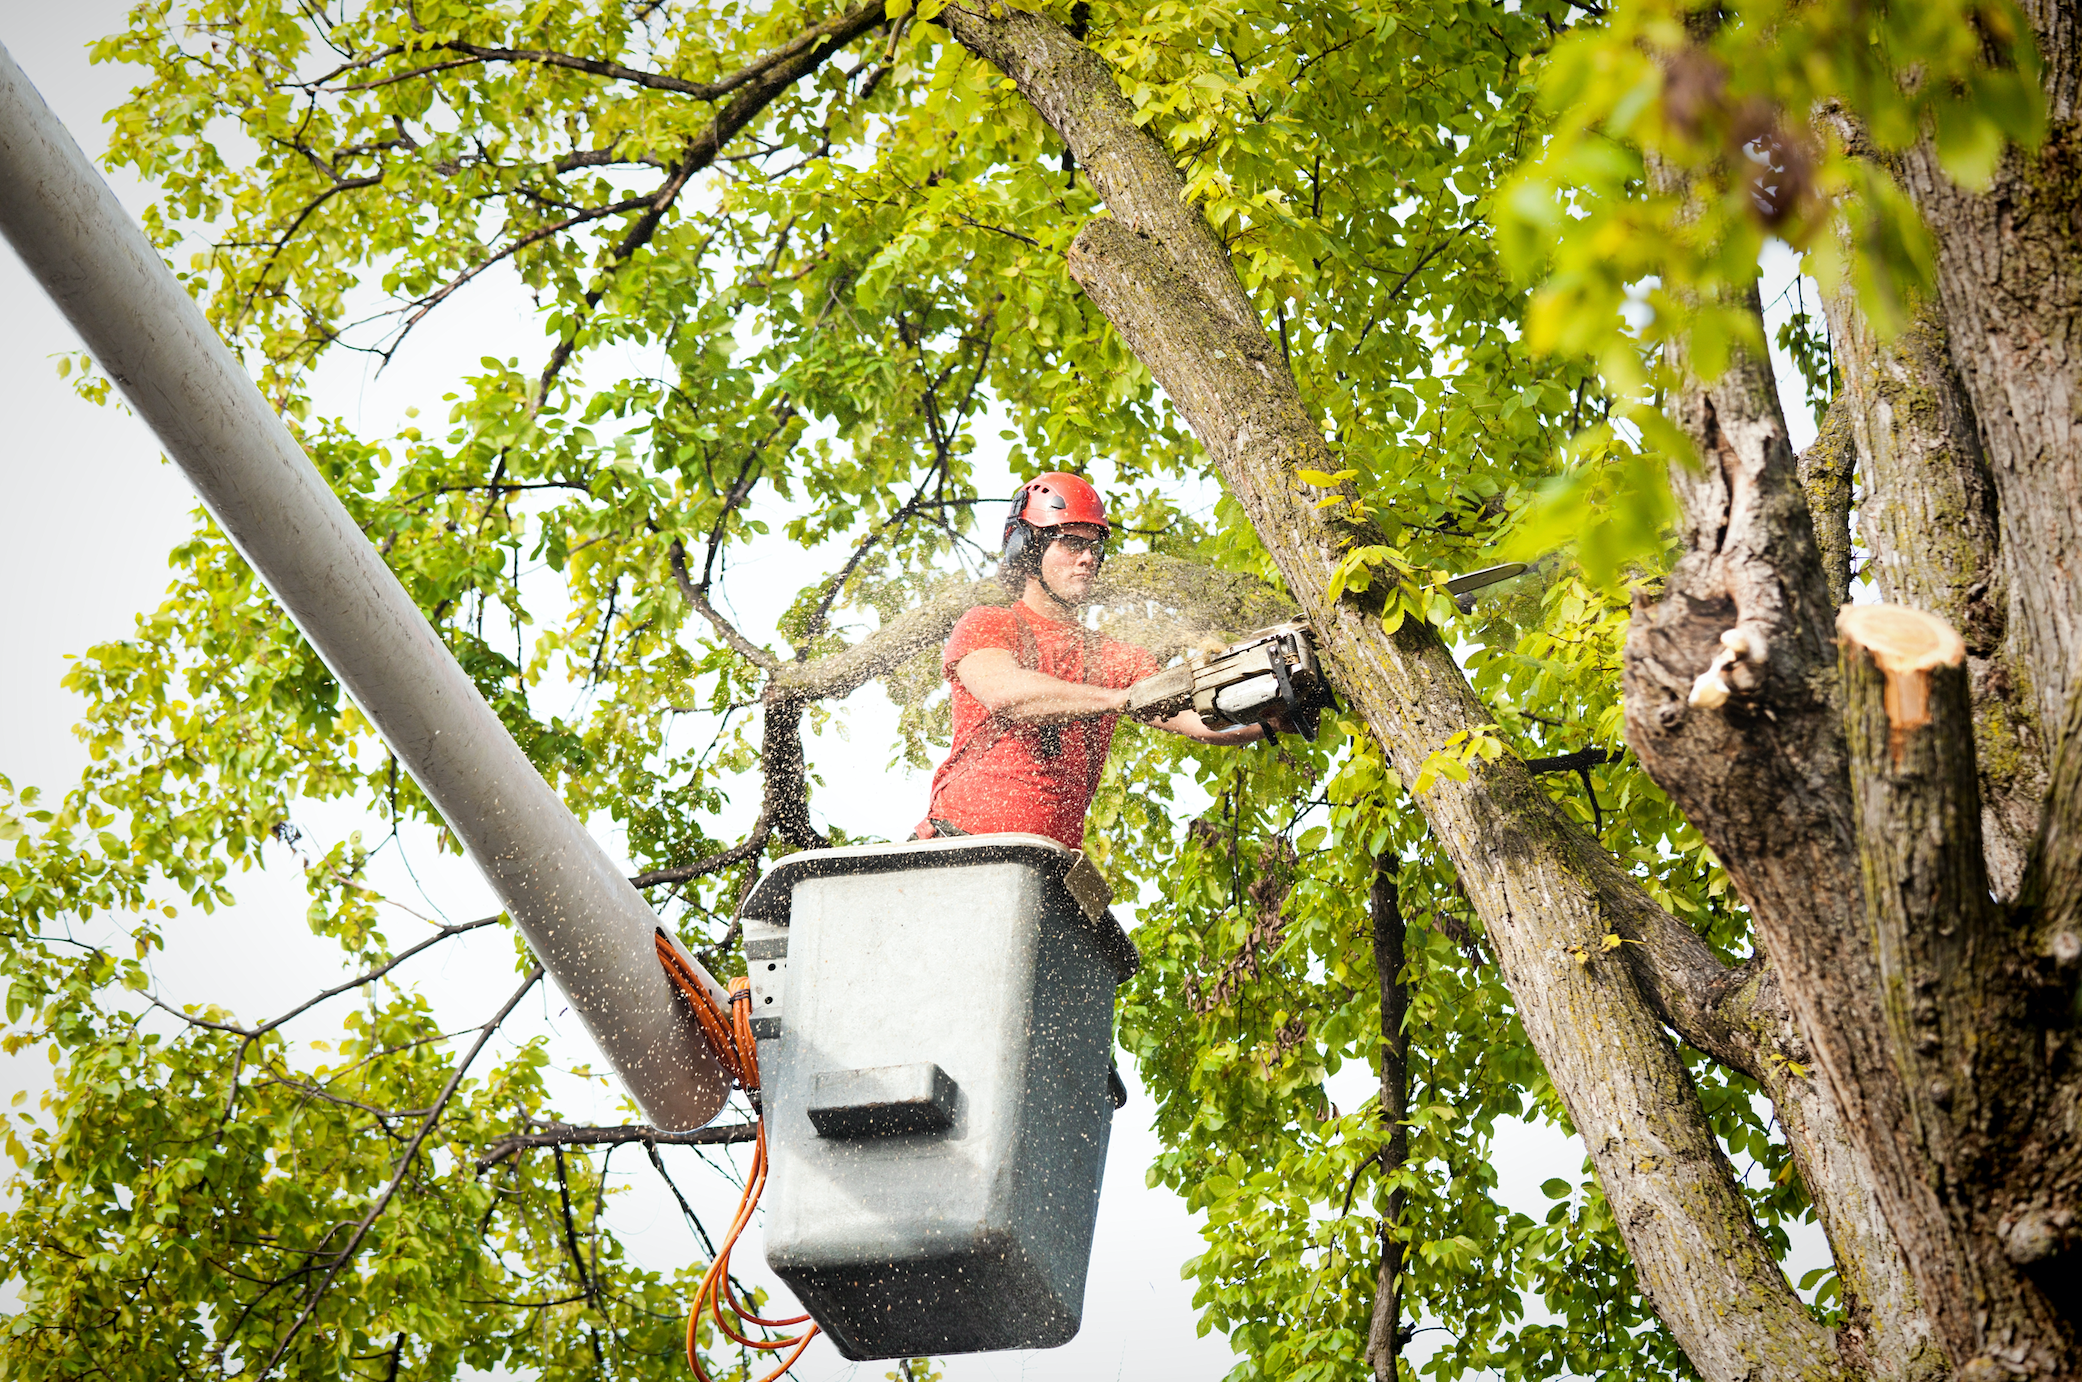 Arborist in a cherry picker performing tree maintenance. 